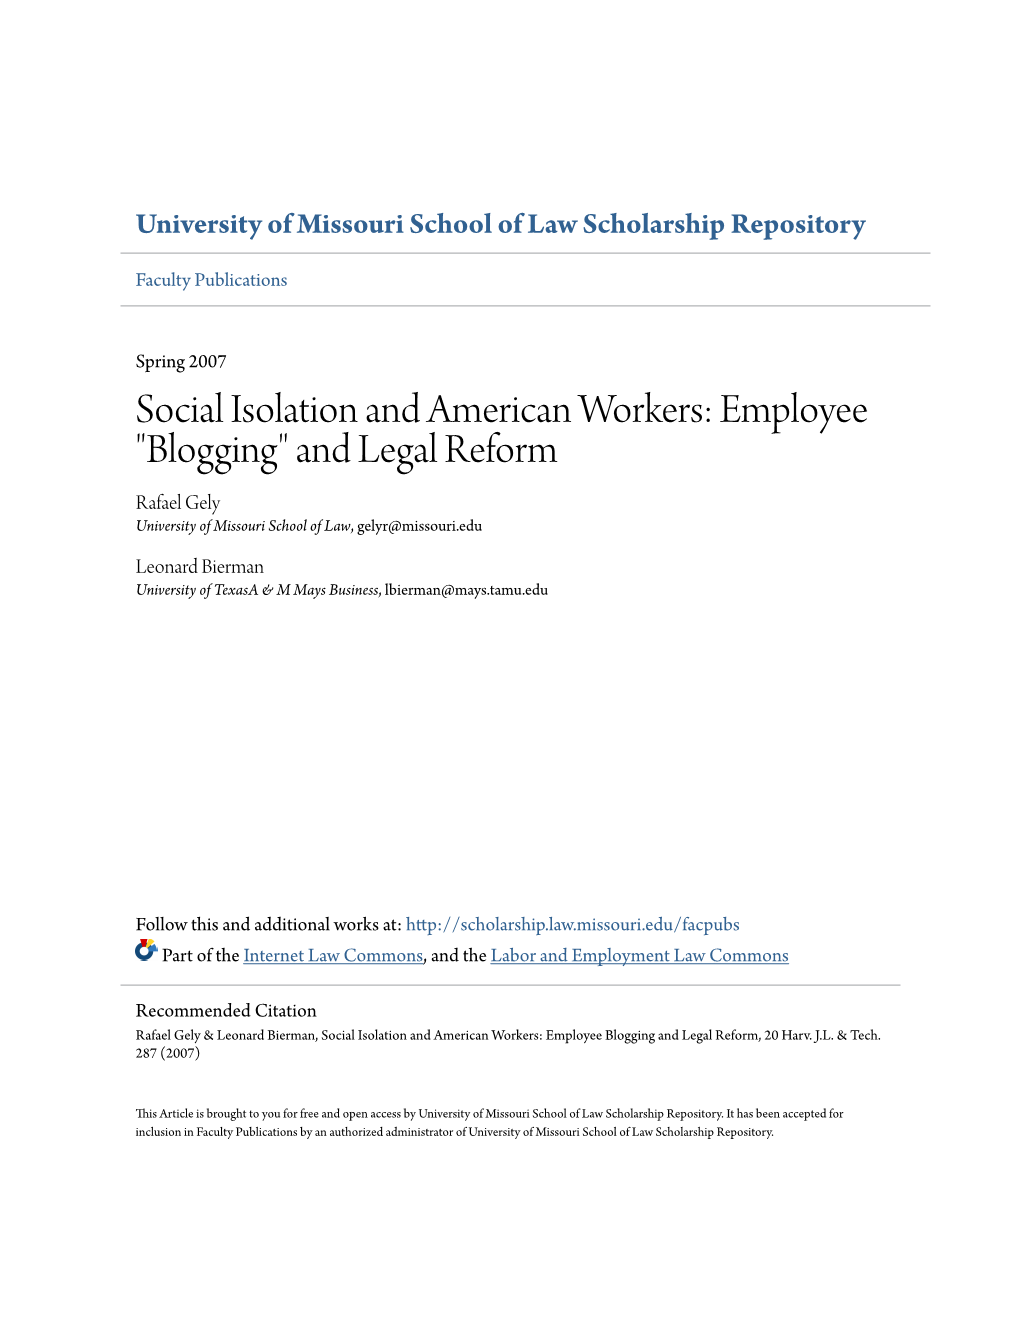 Employee "Blogging" and Legal Reform Rafael Gely University of Missouri School of Law, Gelyr@Missouri.Edu